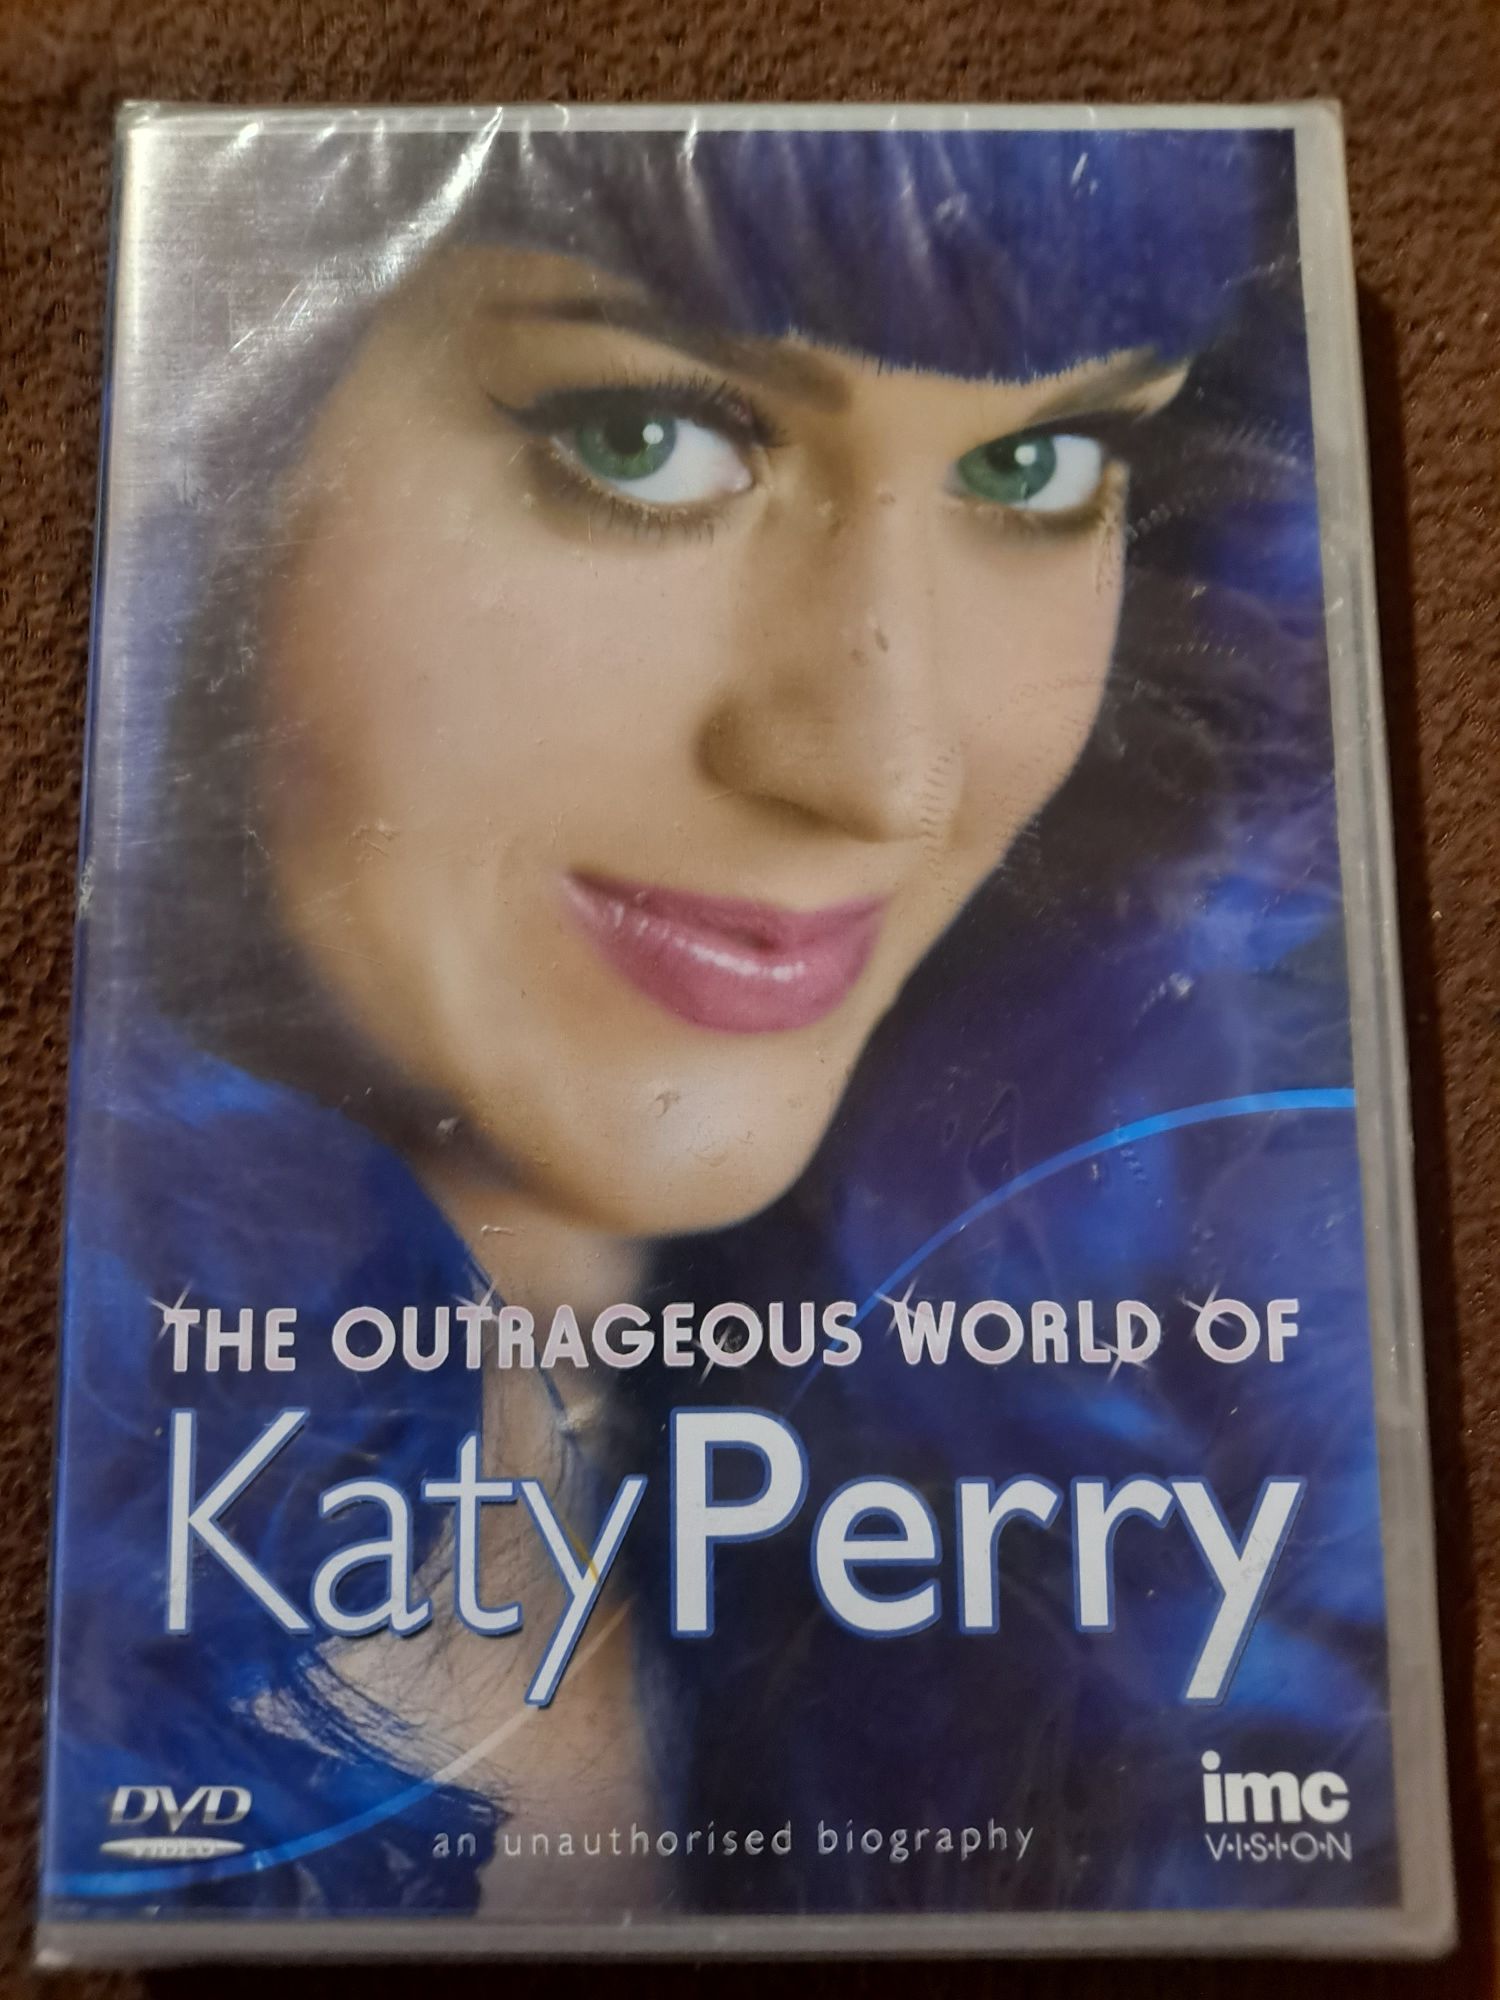 Plyta DVD Katy Perry  nowe